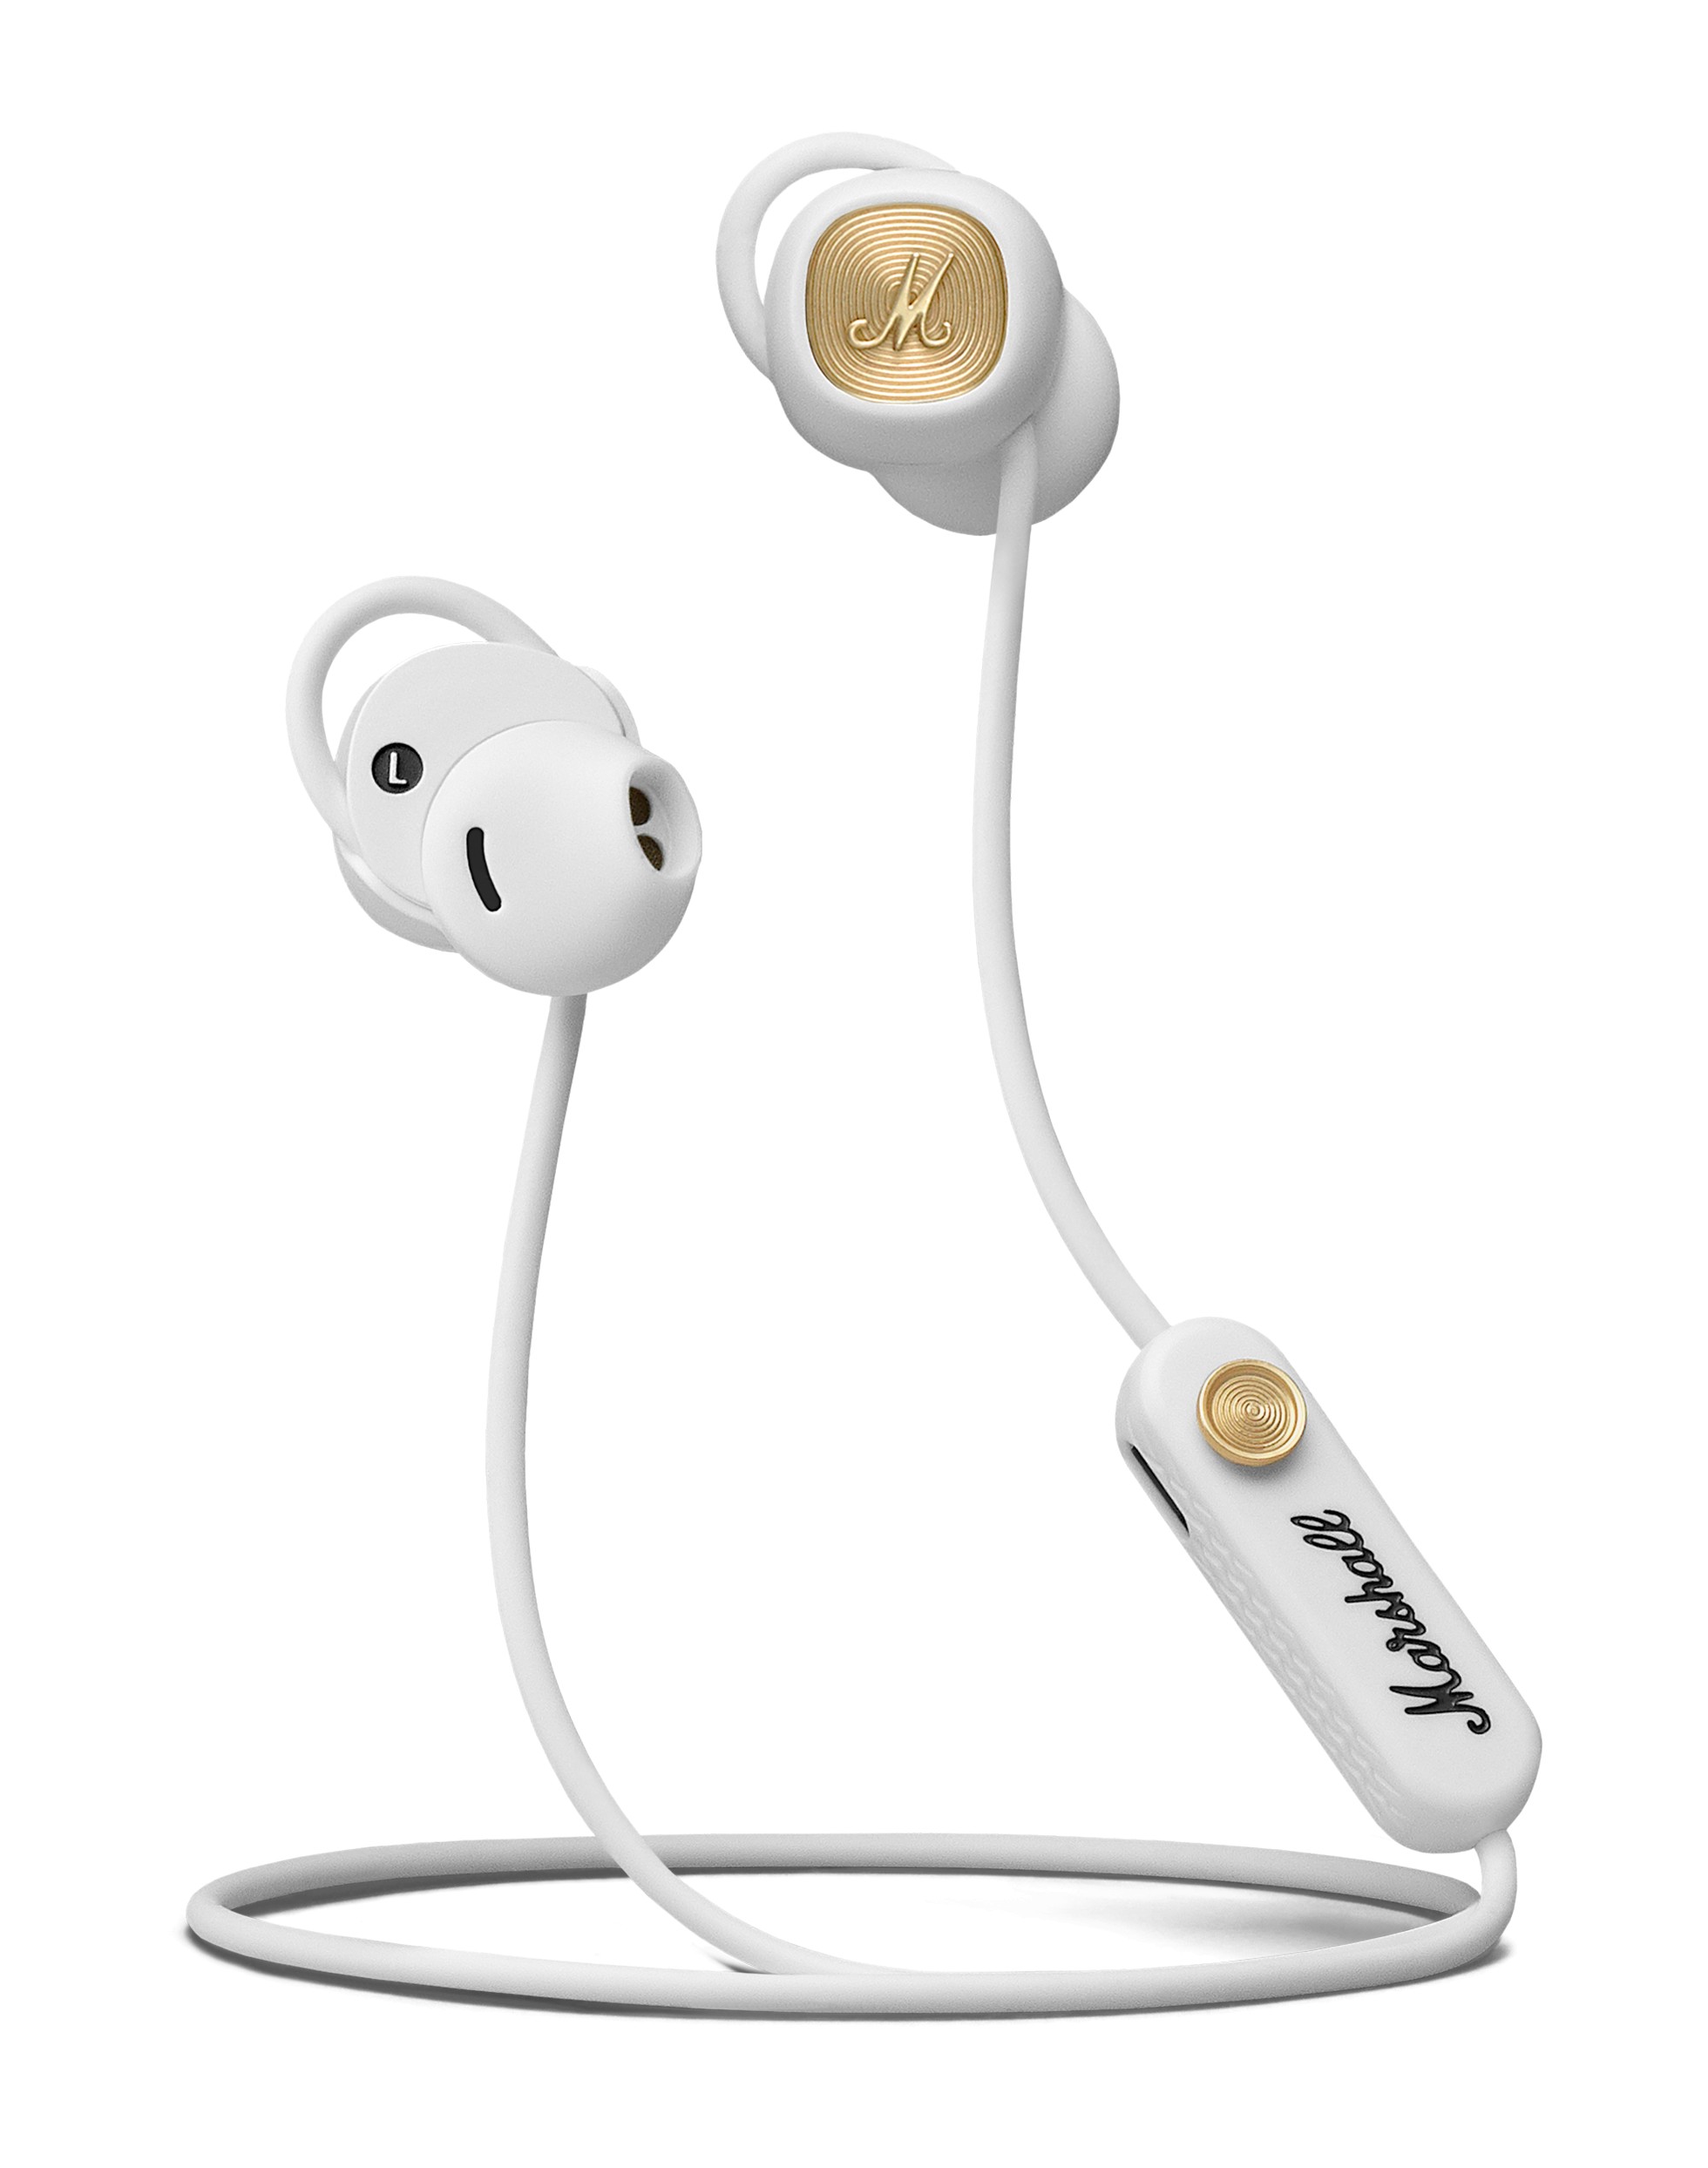 Marshall - Minor II - White - Bluetooth Wireless Headphones 